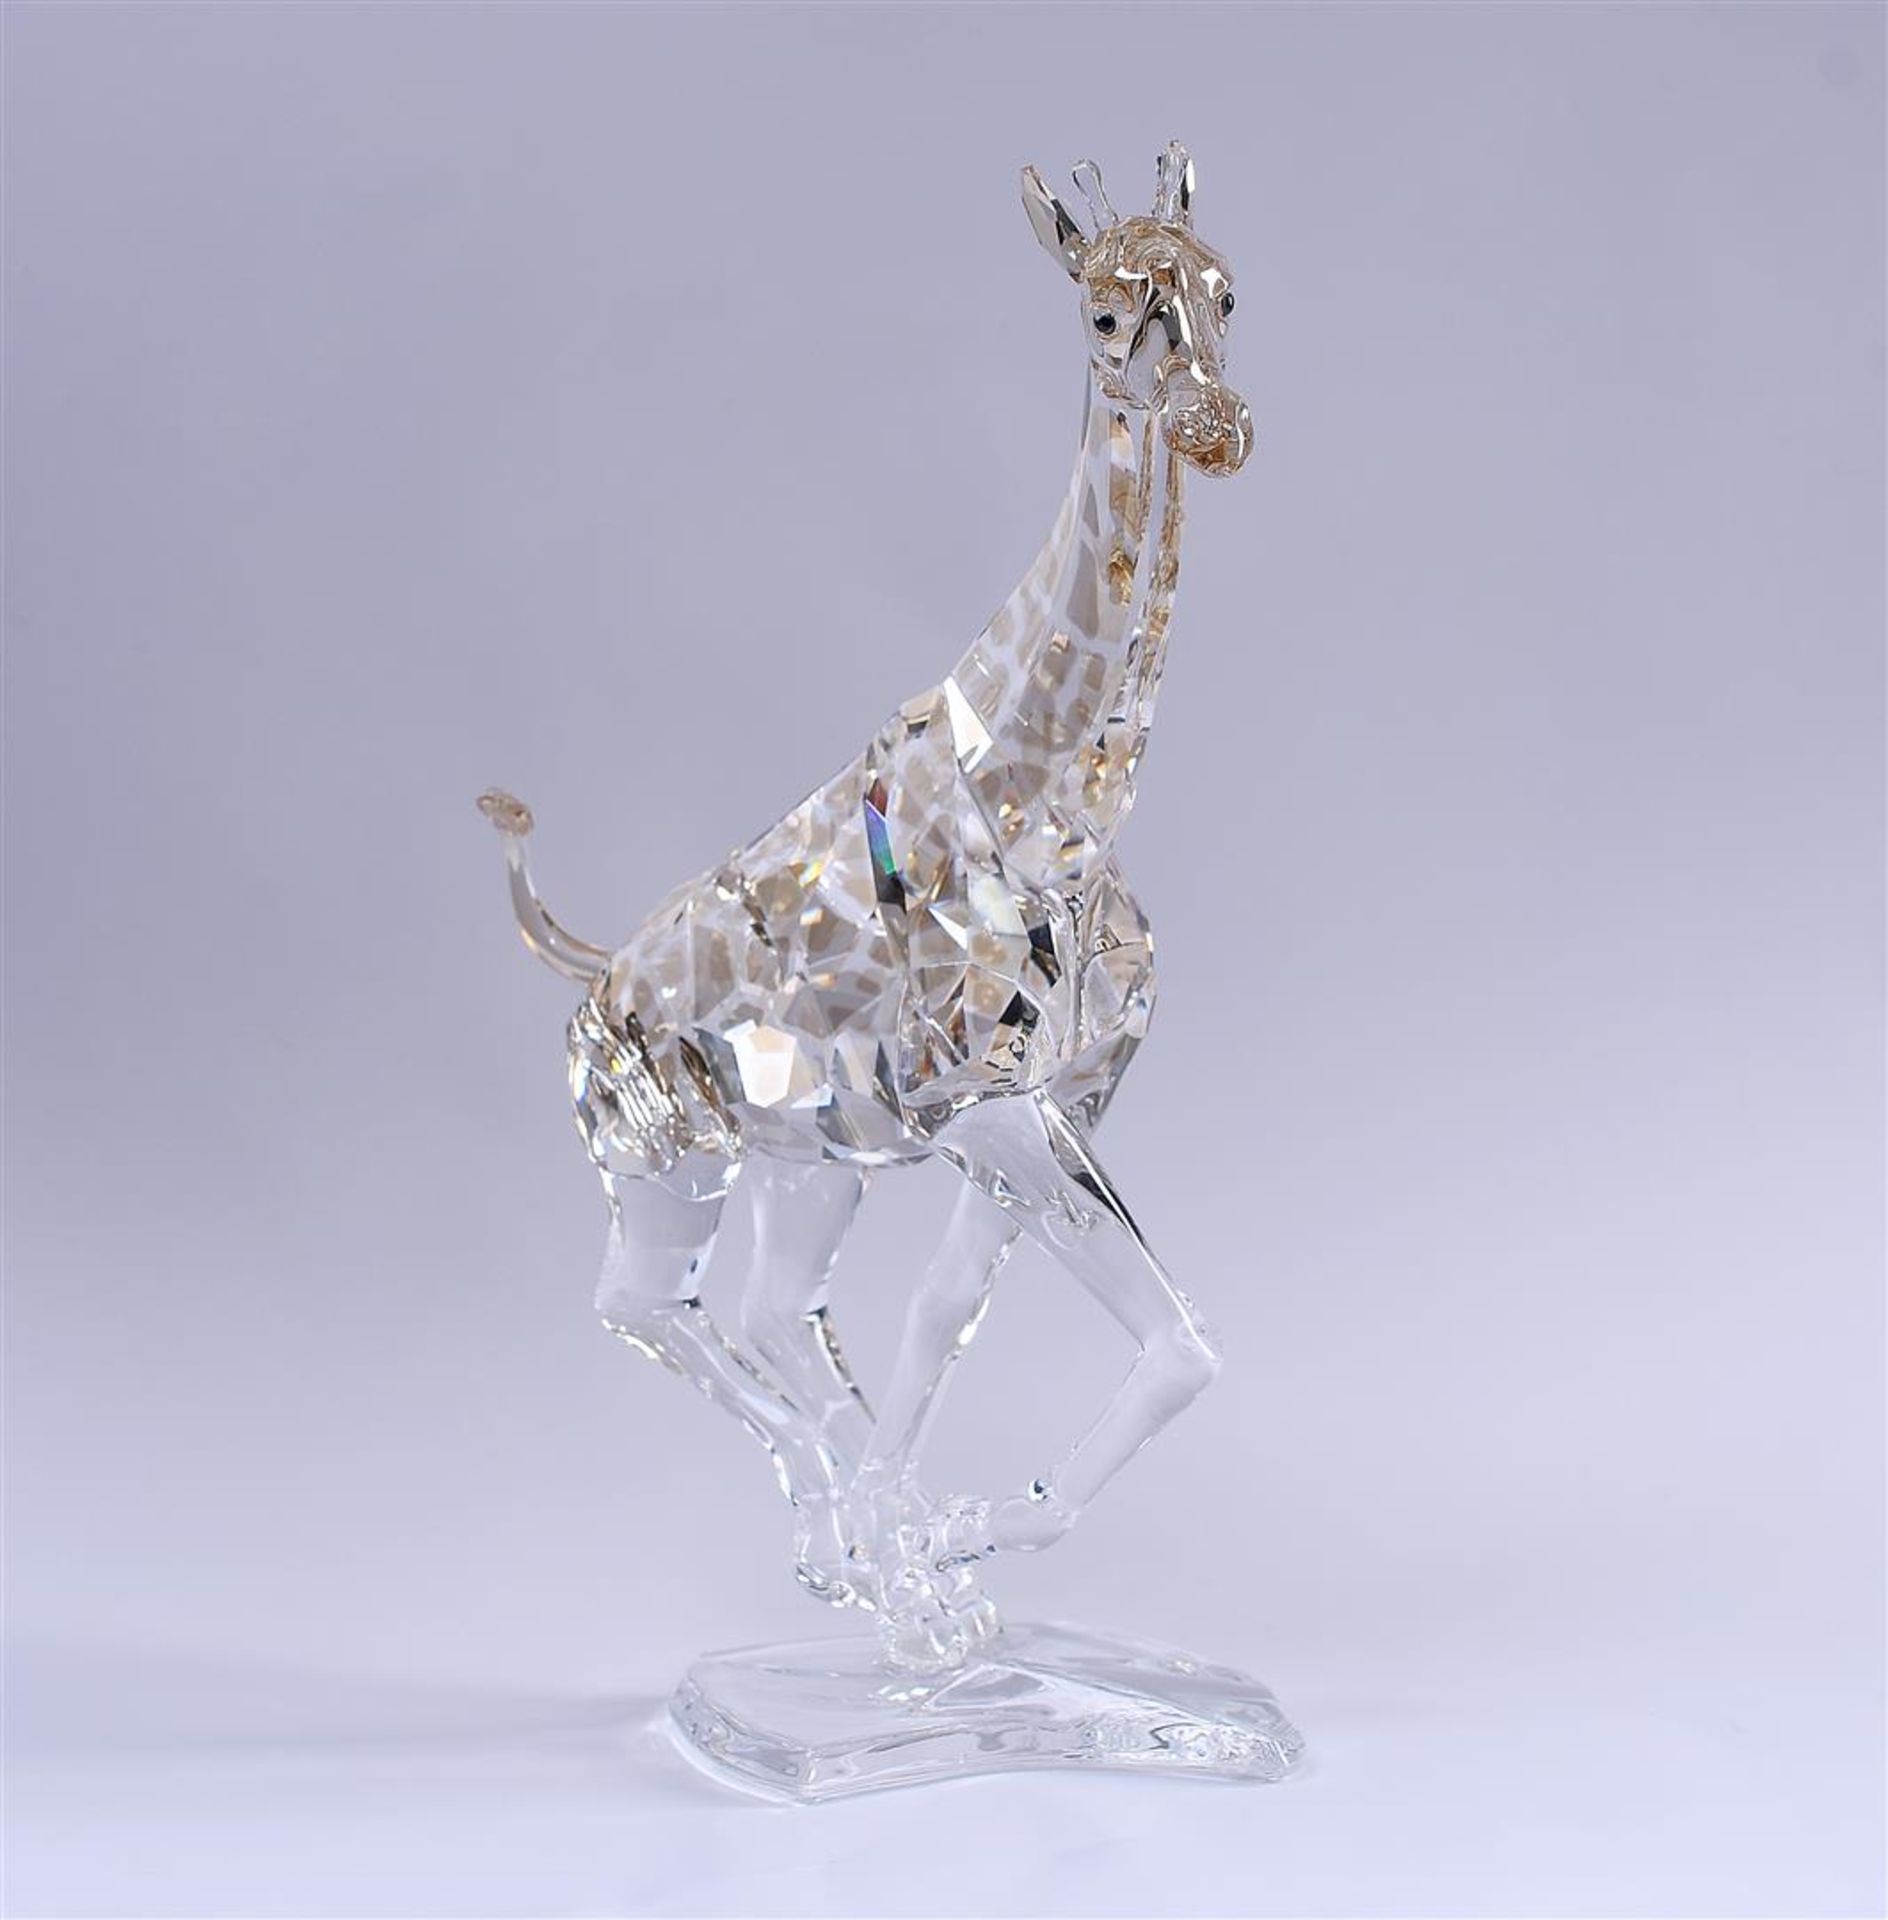 Swarovski, Giraffe, Year of Release 2012, 935896. Includes original box.
17 x 12 cm. - Image 5 of 8